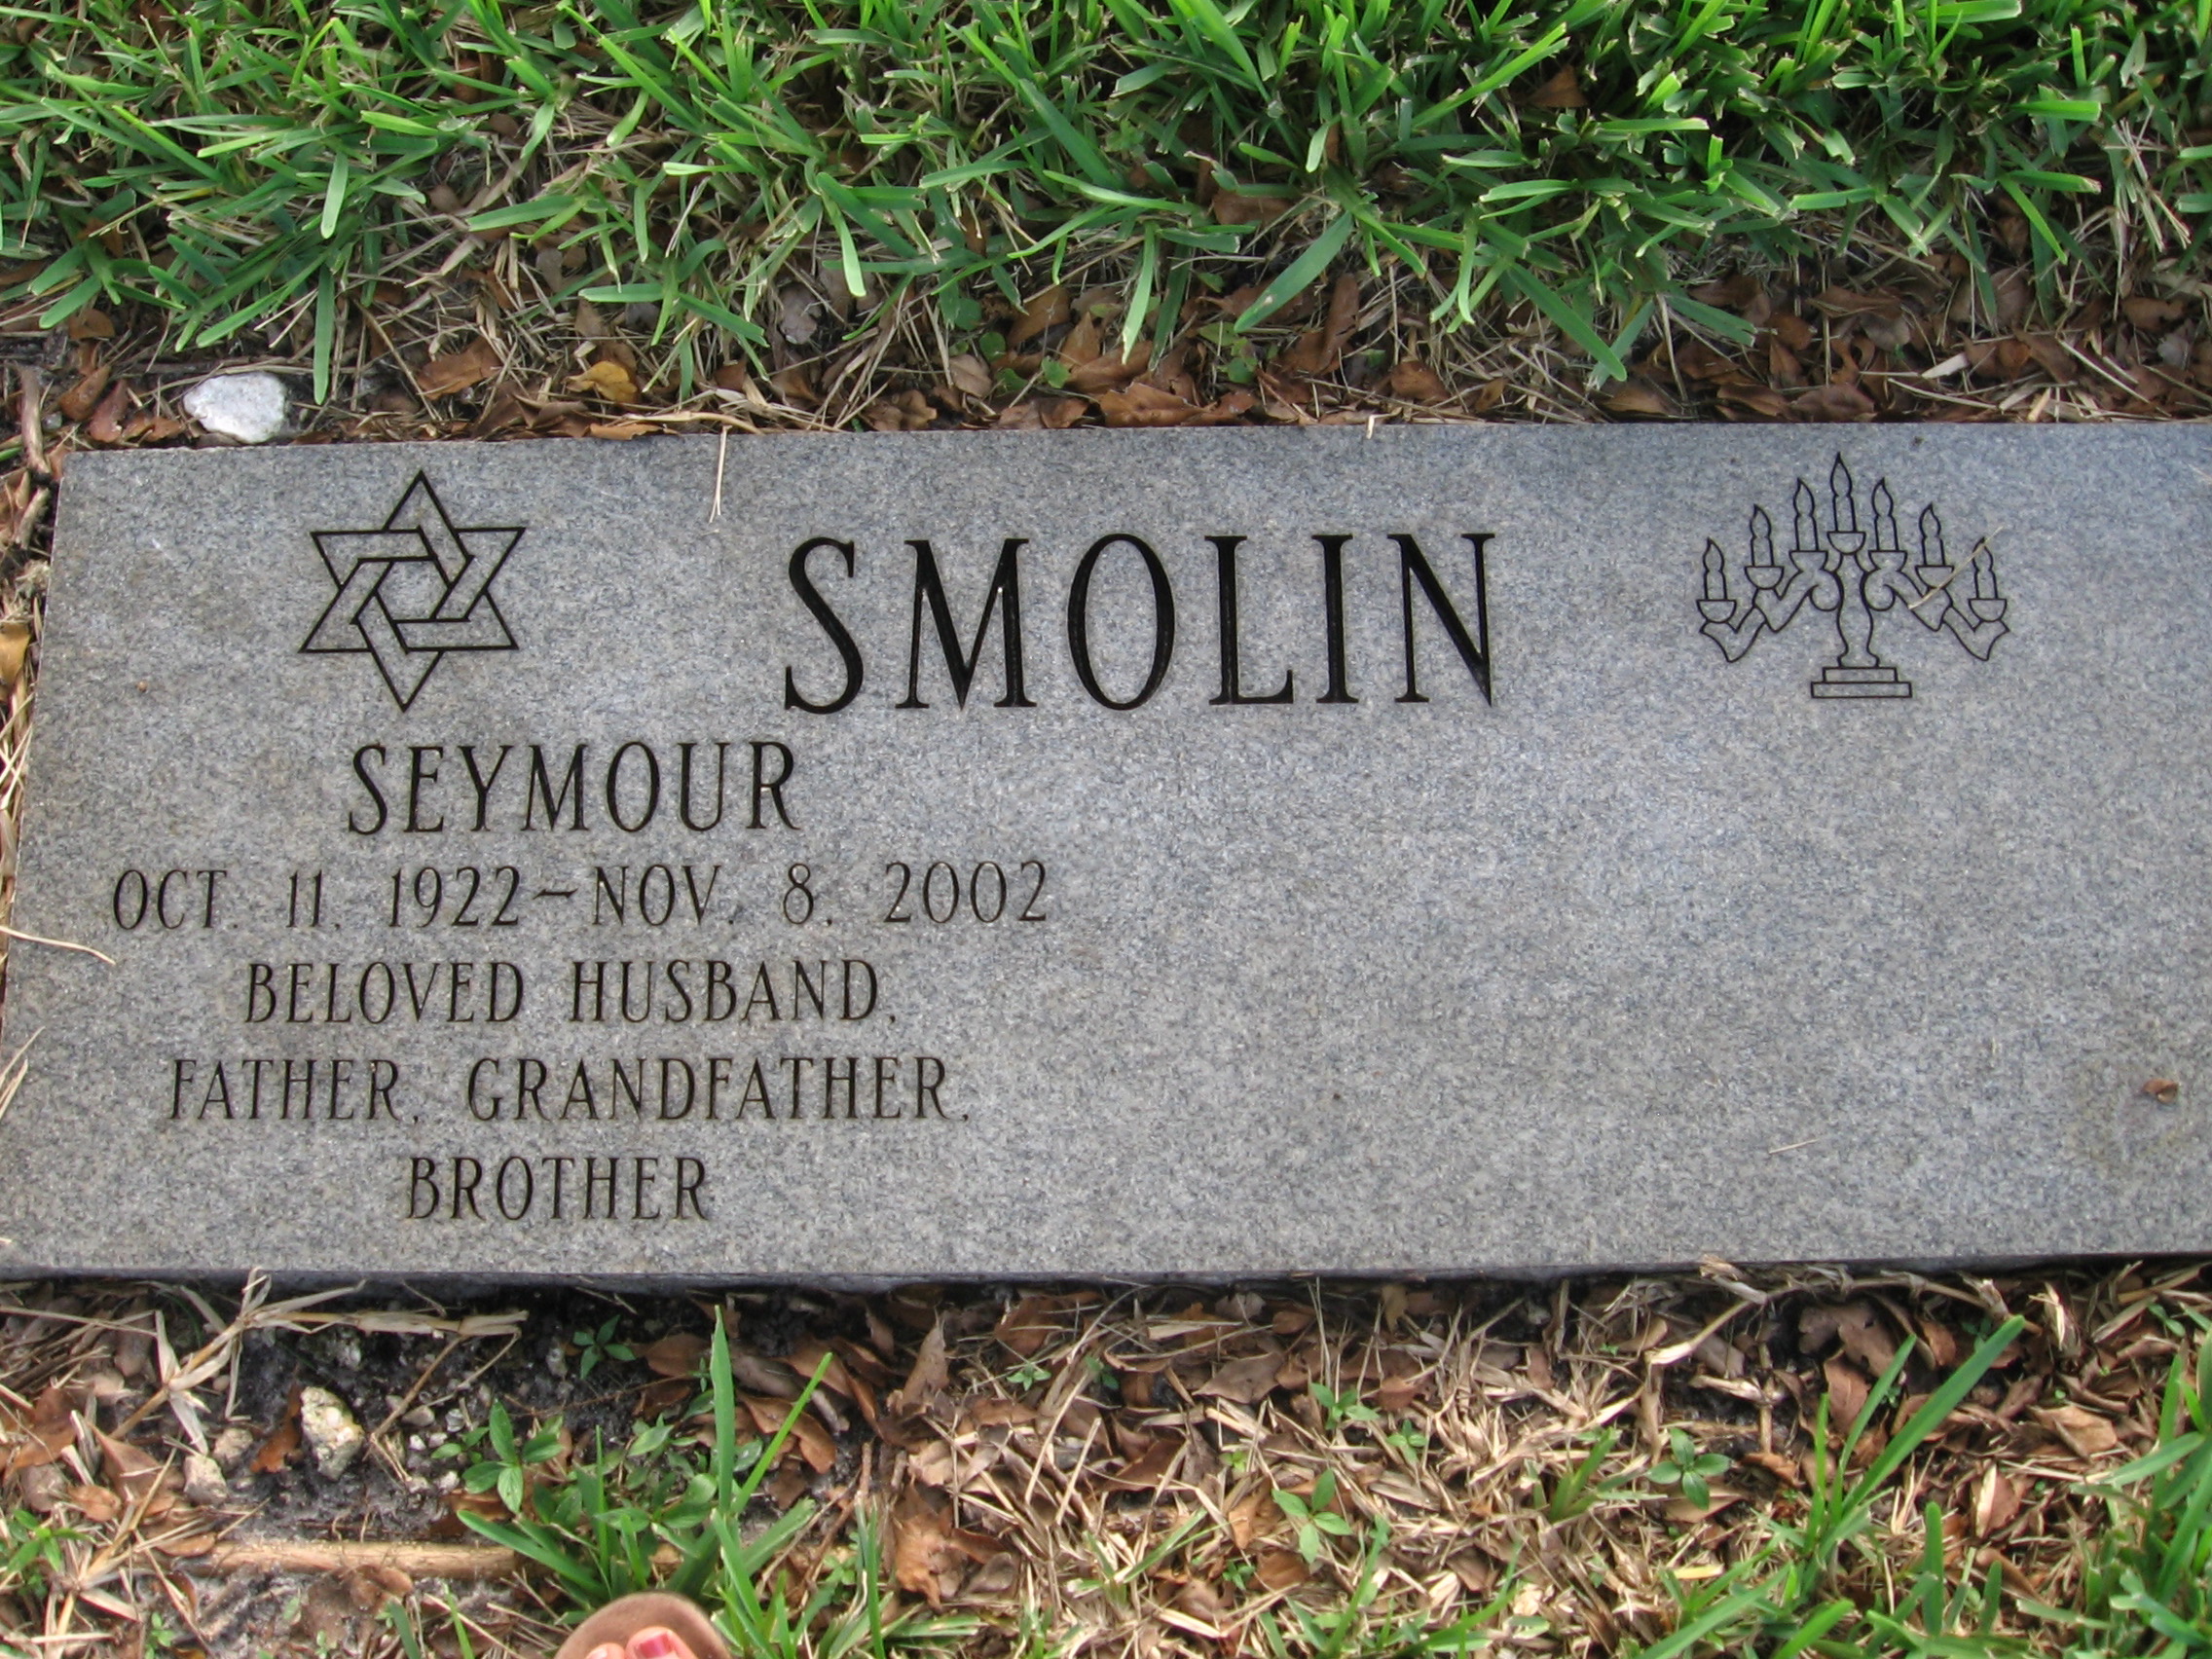 Seymour Smolin